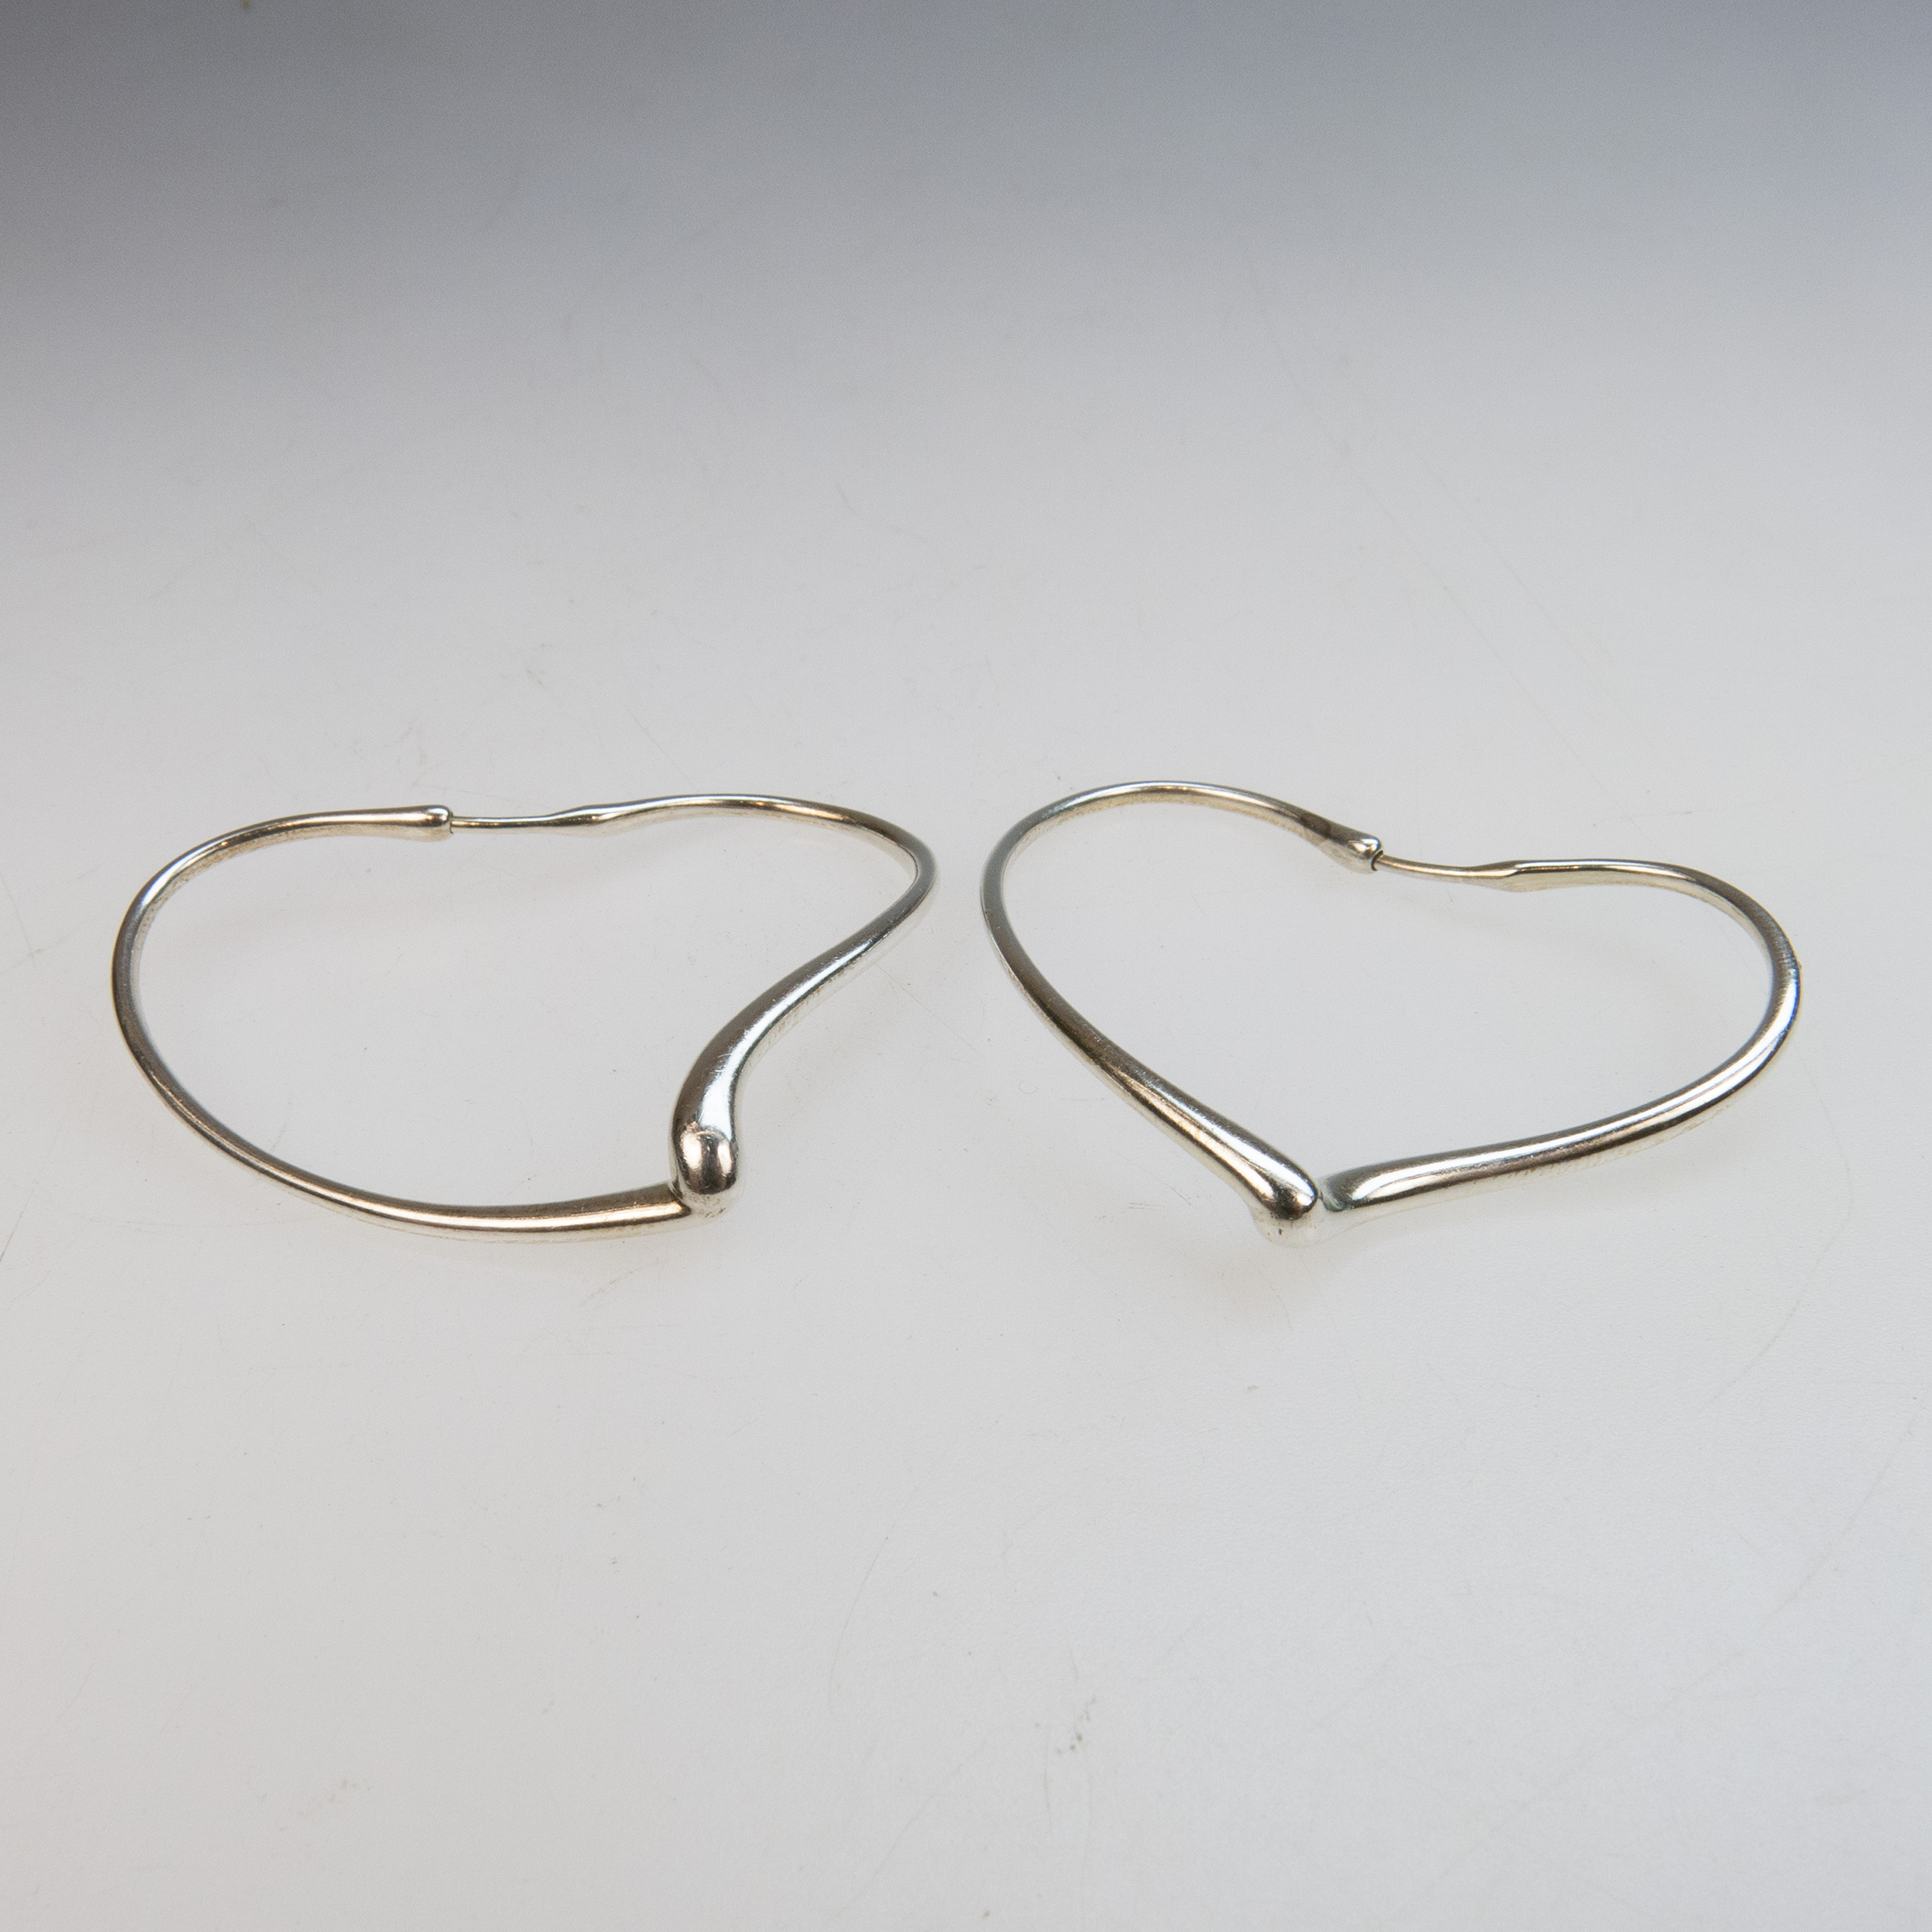 Pair Of Tiffany & Co. Elsa Peretti Sterling Silver Heart-Shaped Hoop Earrings